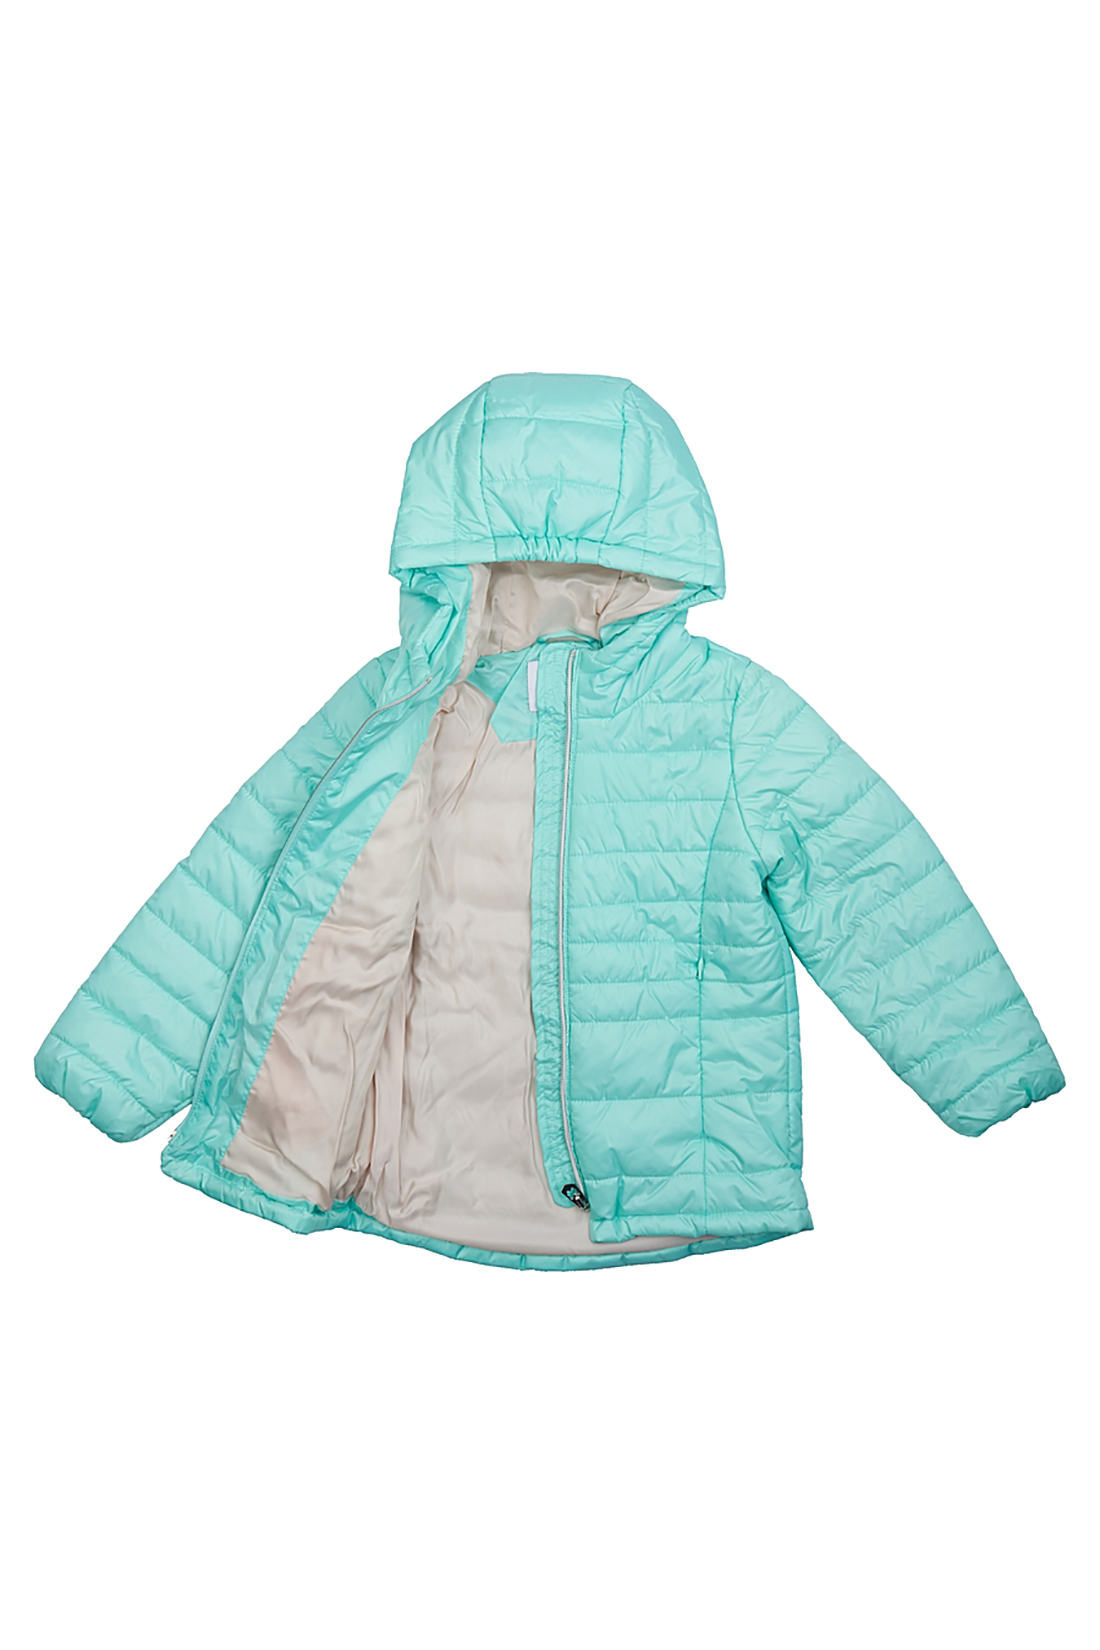 Куртка для девочки (арт. baon BK038001), размер 98-104, цвет зеленый Куртка для девочки (арт. baon BK038001) - фото 3